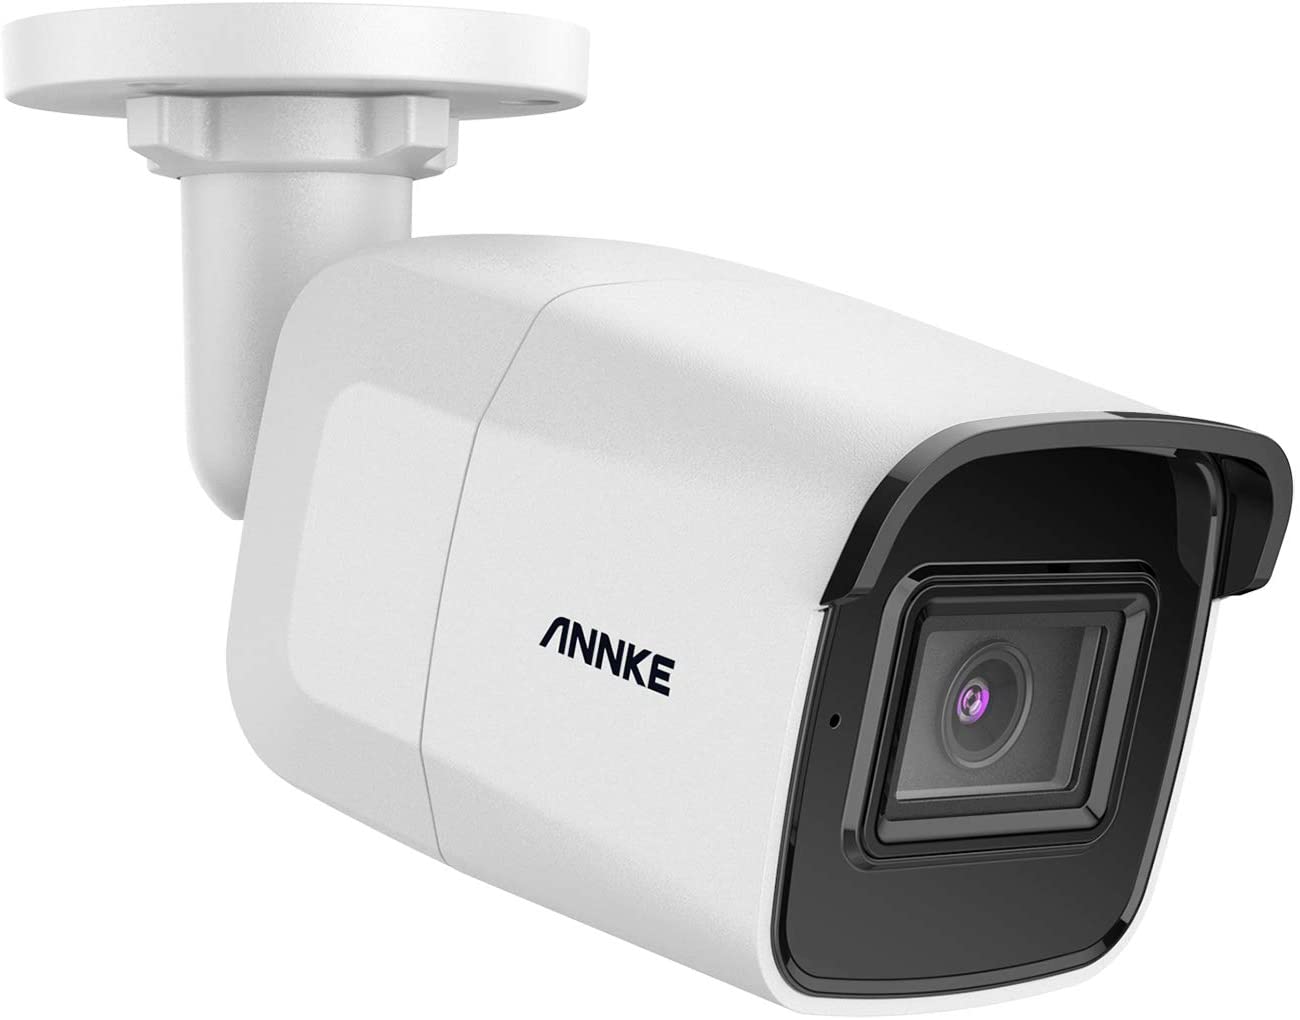 ANNKE C800 Bullet POE 4K Security Camera w/ Audio, 100ft EXIR Night Vision, Smart IR, IP67 Weatherproof $69.99 + Free Shipping